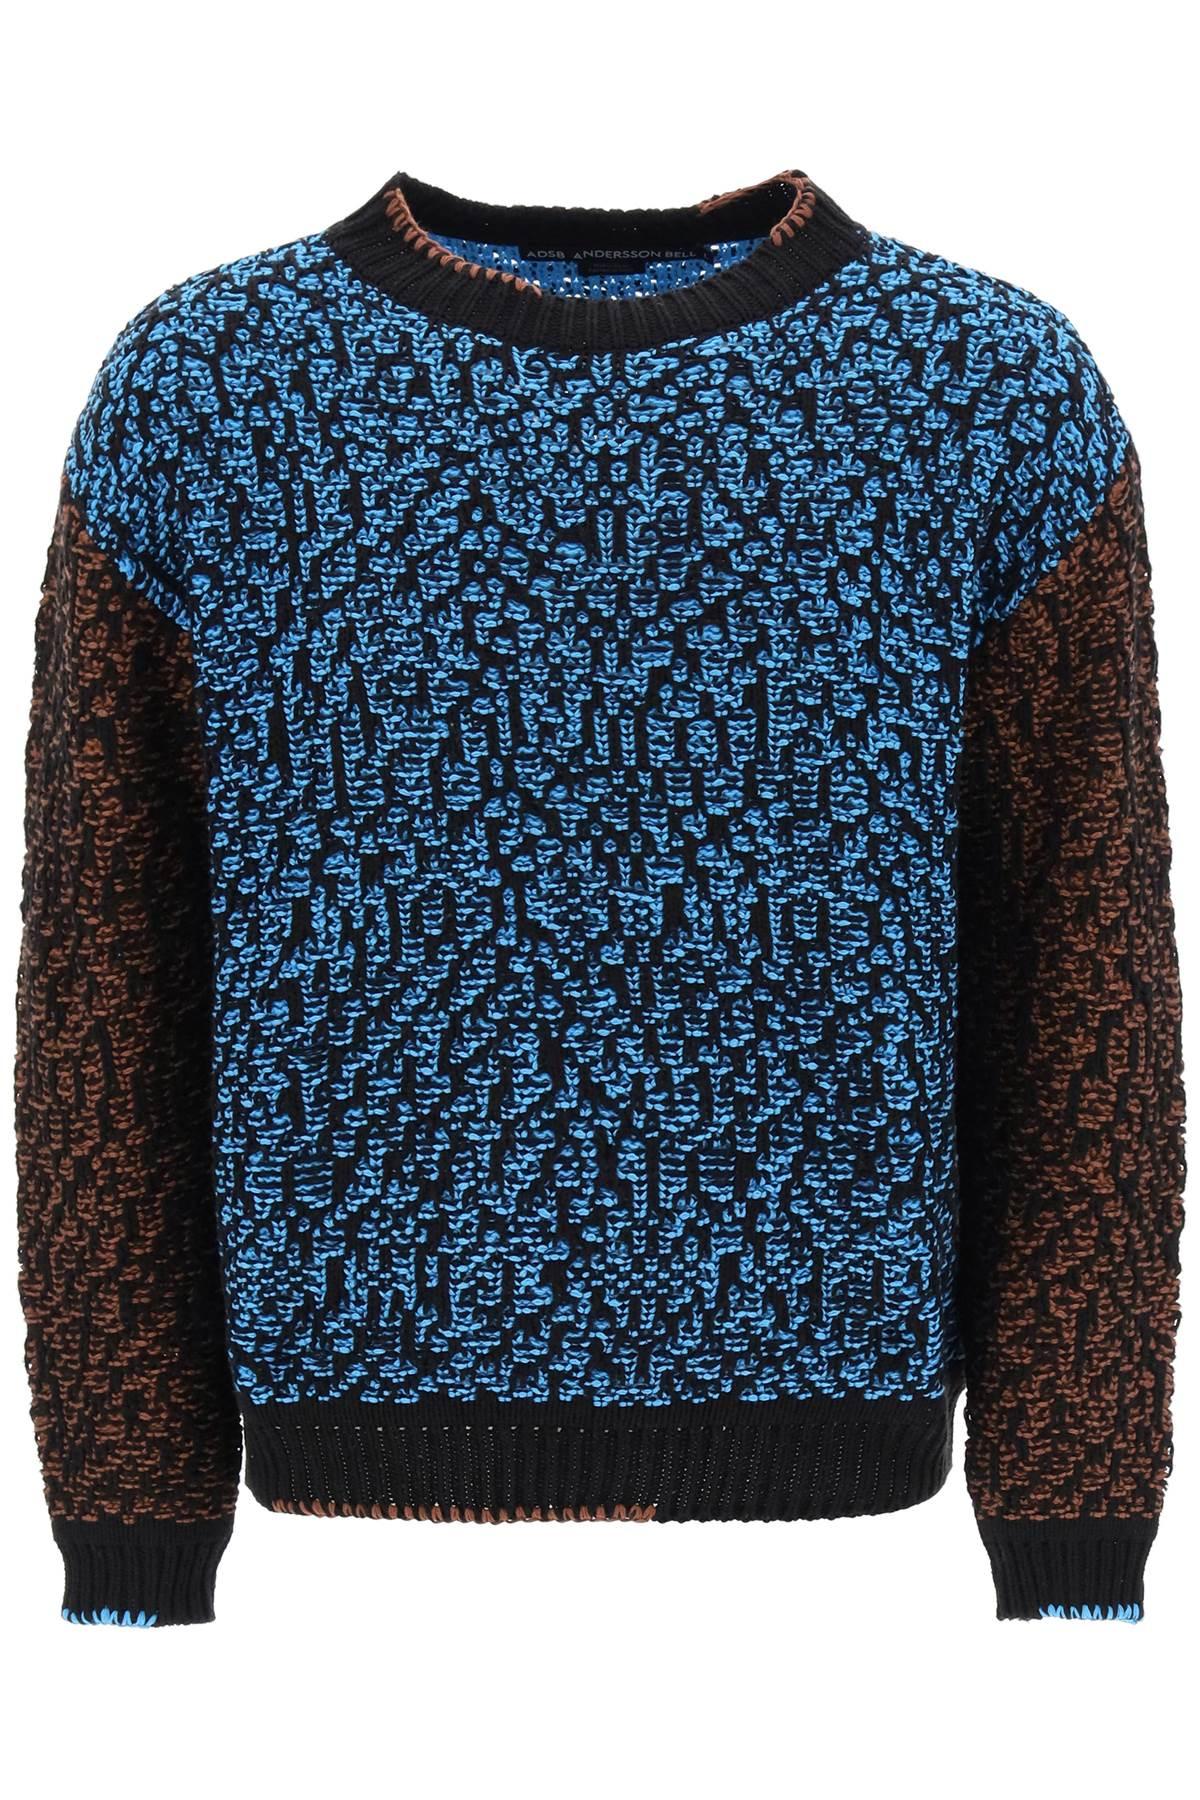 Andersson Bell Multicolored Net Cotton Blend Sweater - JOHN JULIA